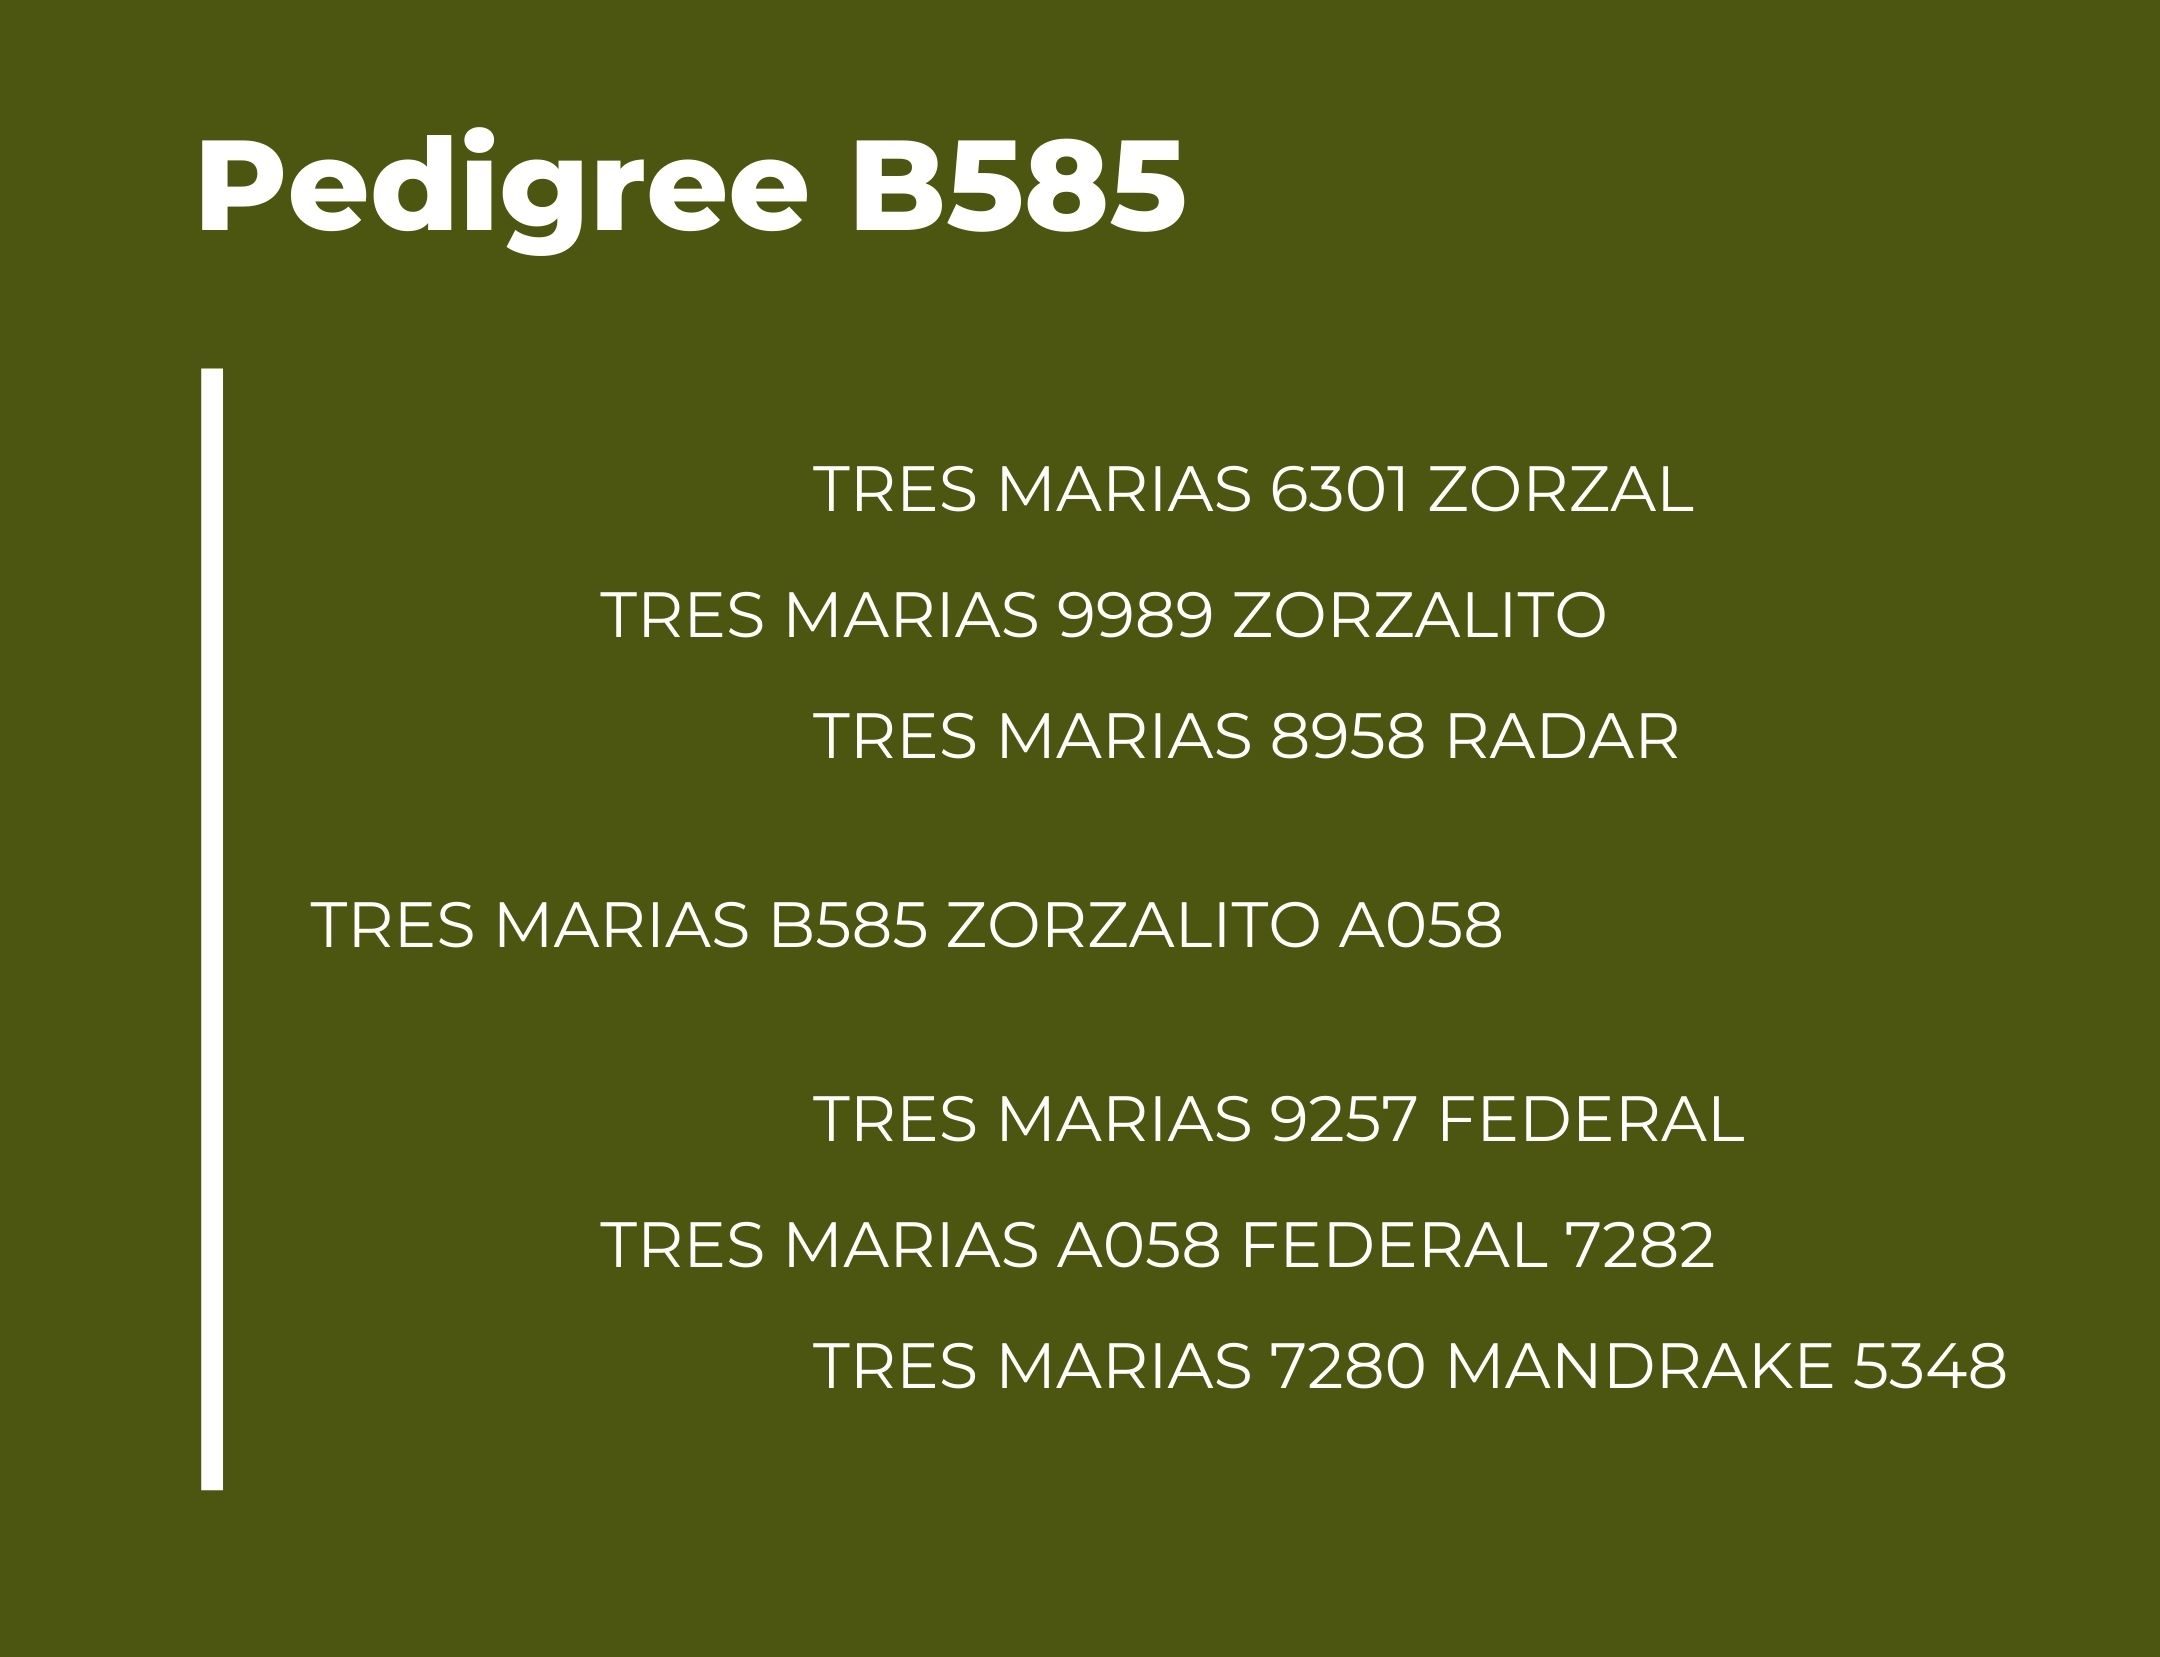 Catalogo Tres Marias Pedigree B585